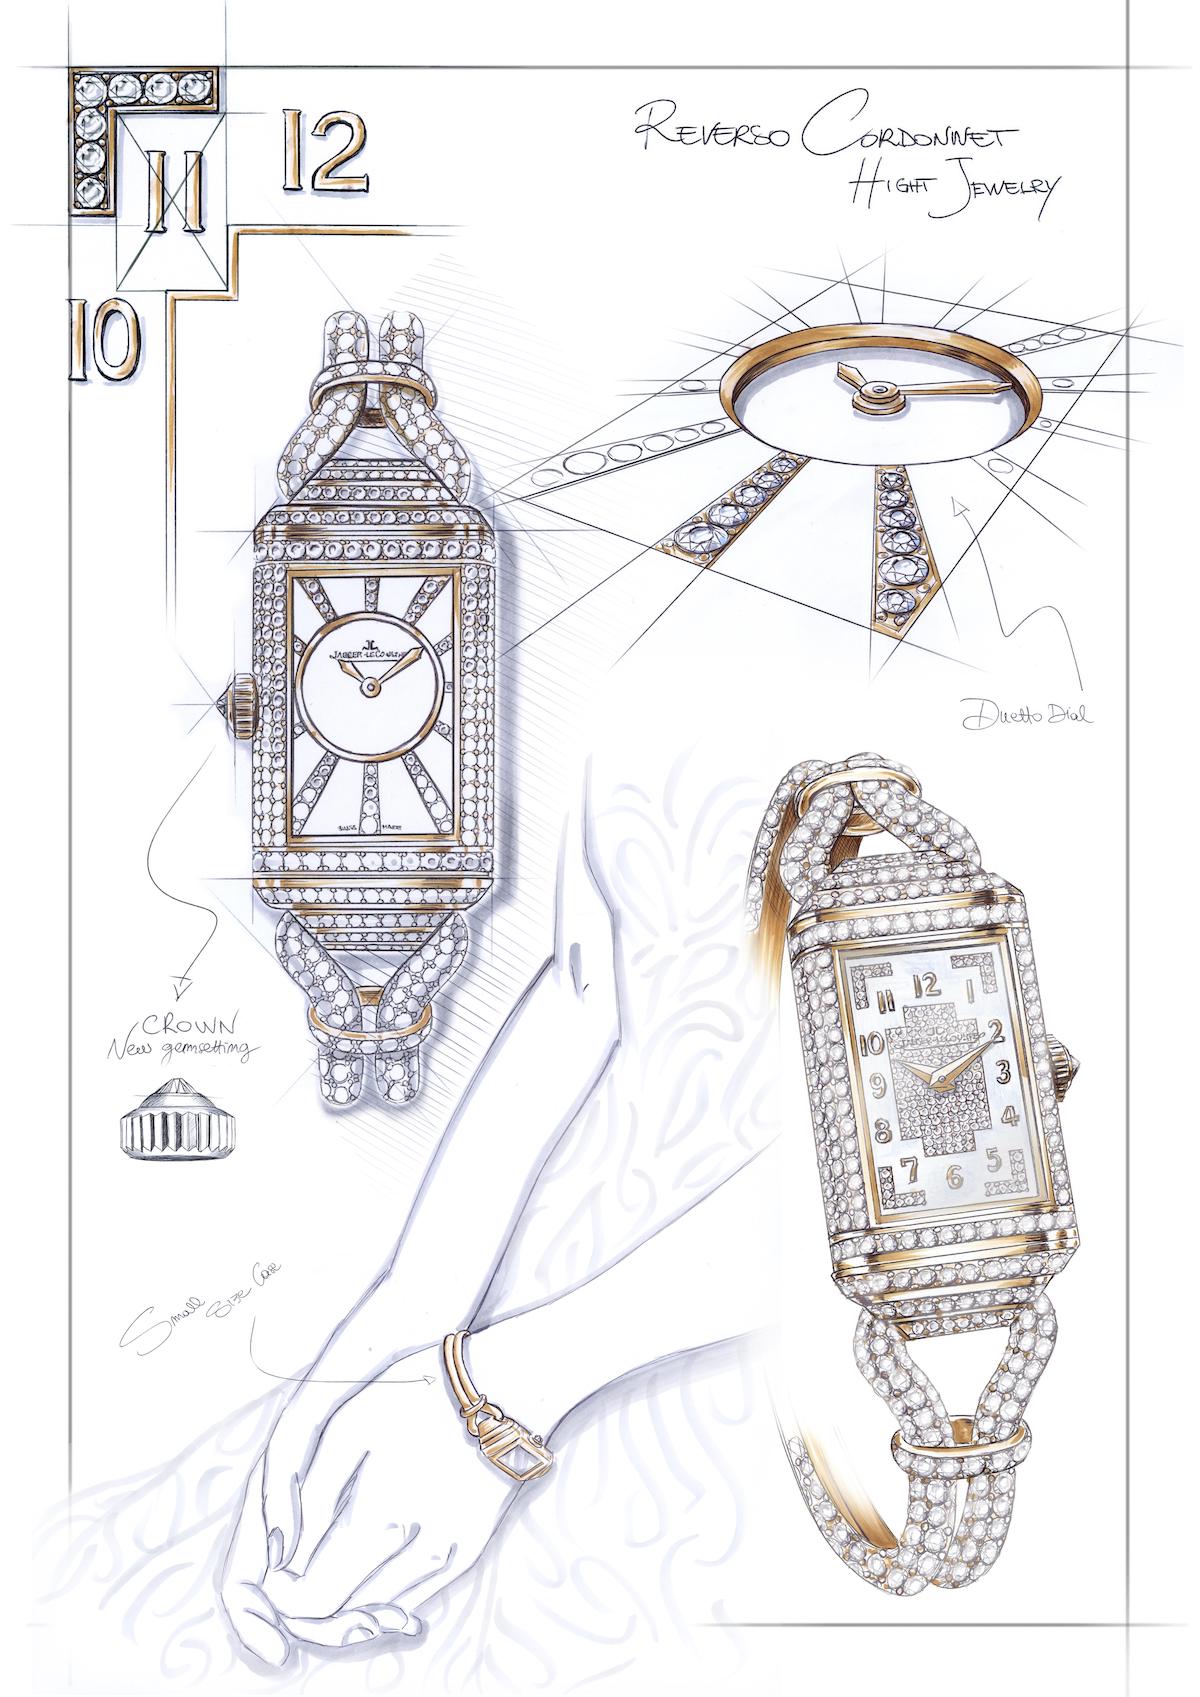 Jaeger LeCoultre Reverso One Cordonnet Jewellery Duetto 2021 Design Sketch